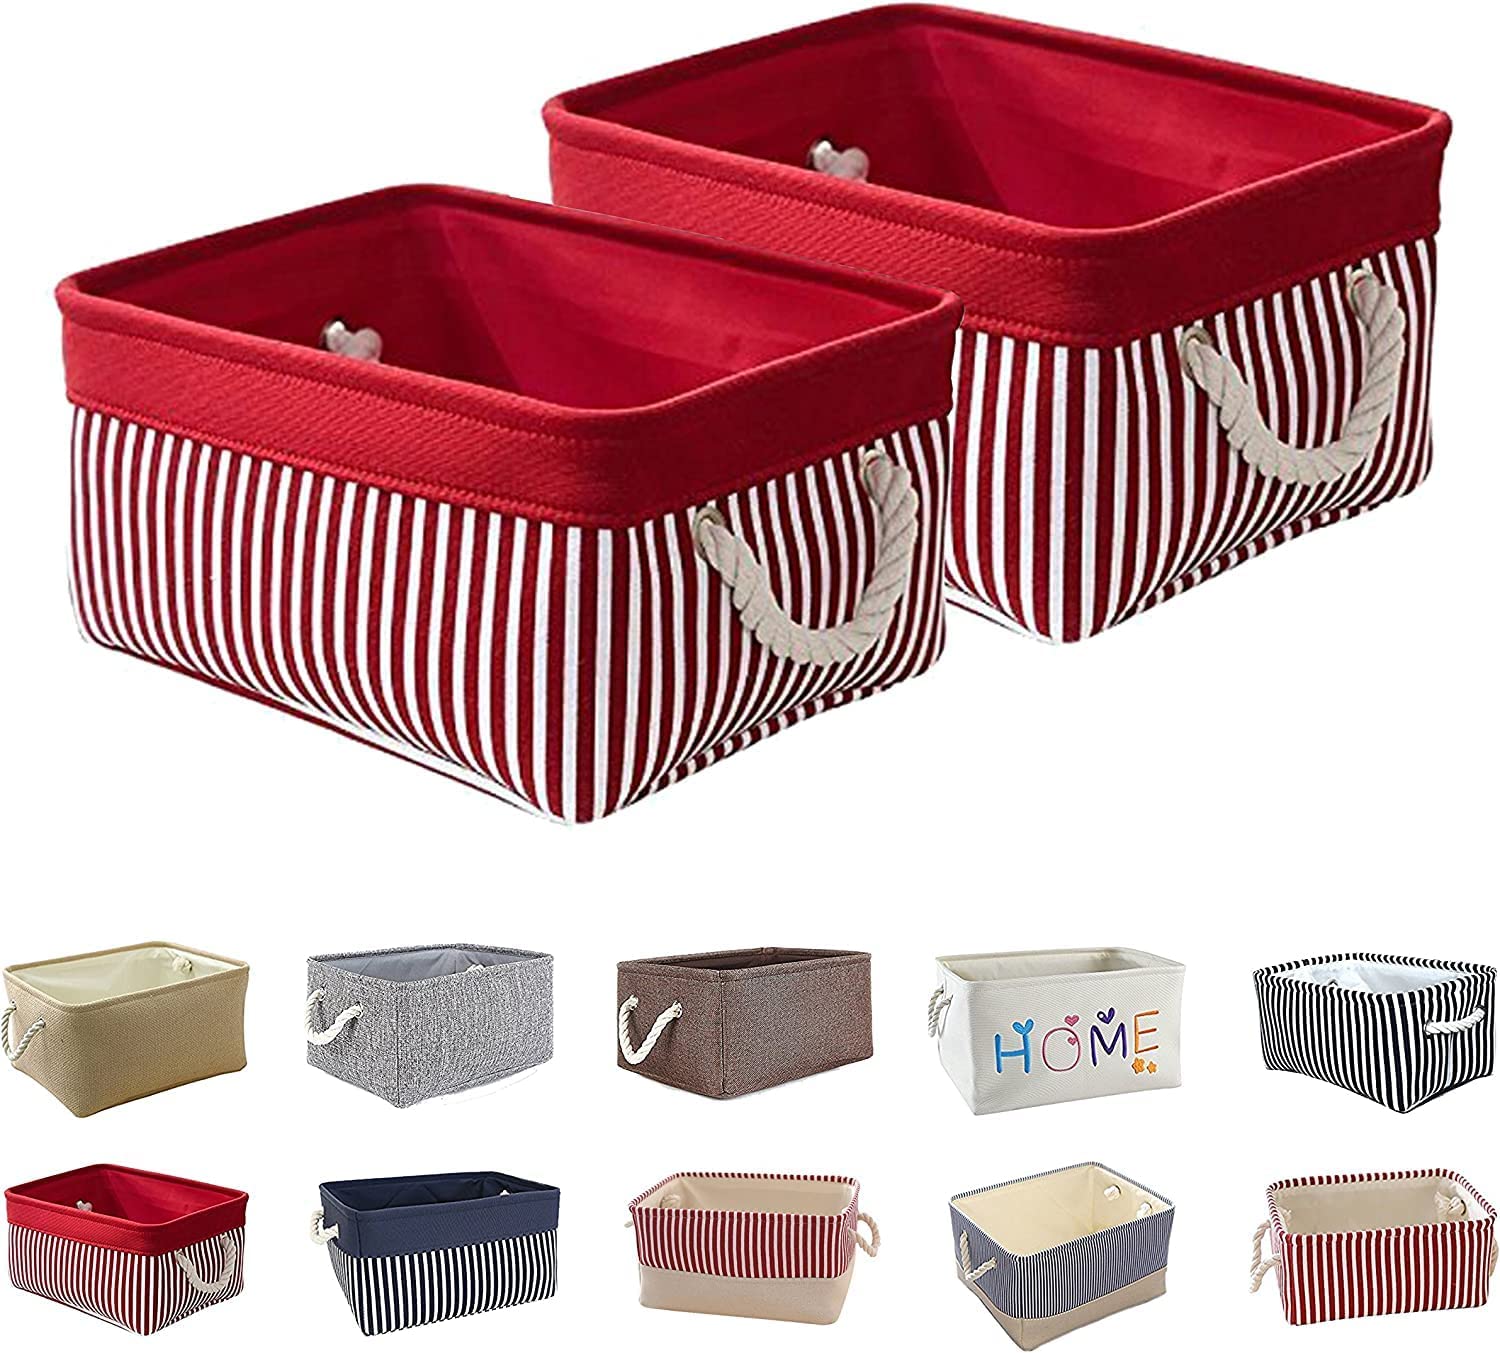 2 Pack Closet Canvas Fabric Storage Basket Storage Bins Organizing Baskets for Shelves, Closets, Laundry, Nursery, Decorative Baskets for Gifts Empty